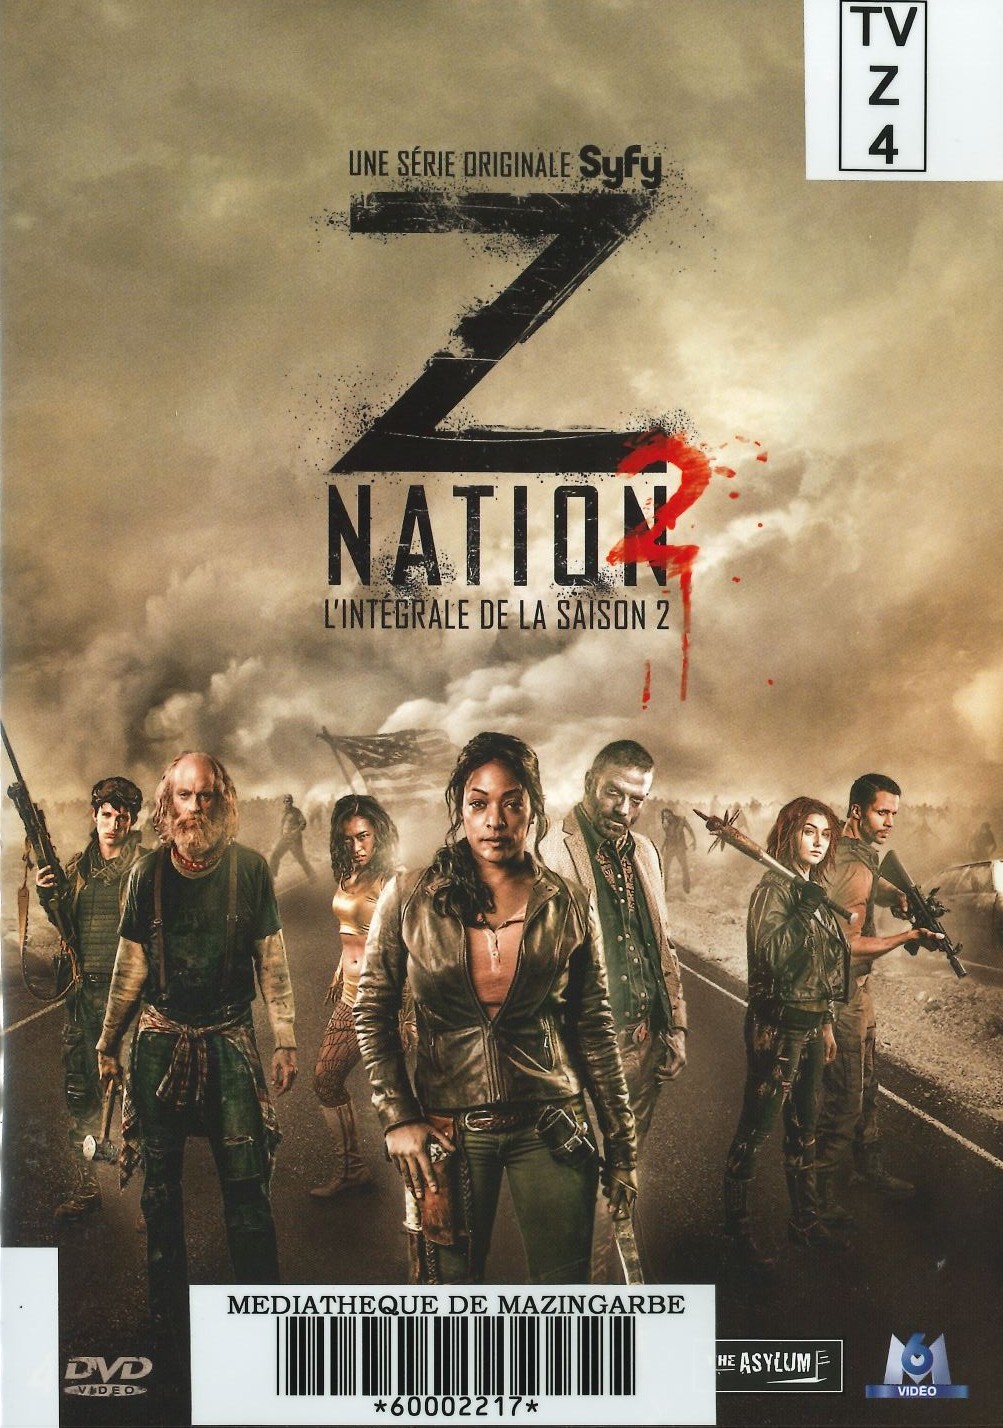 Z Nation Saison 2